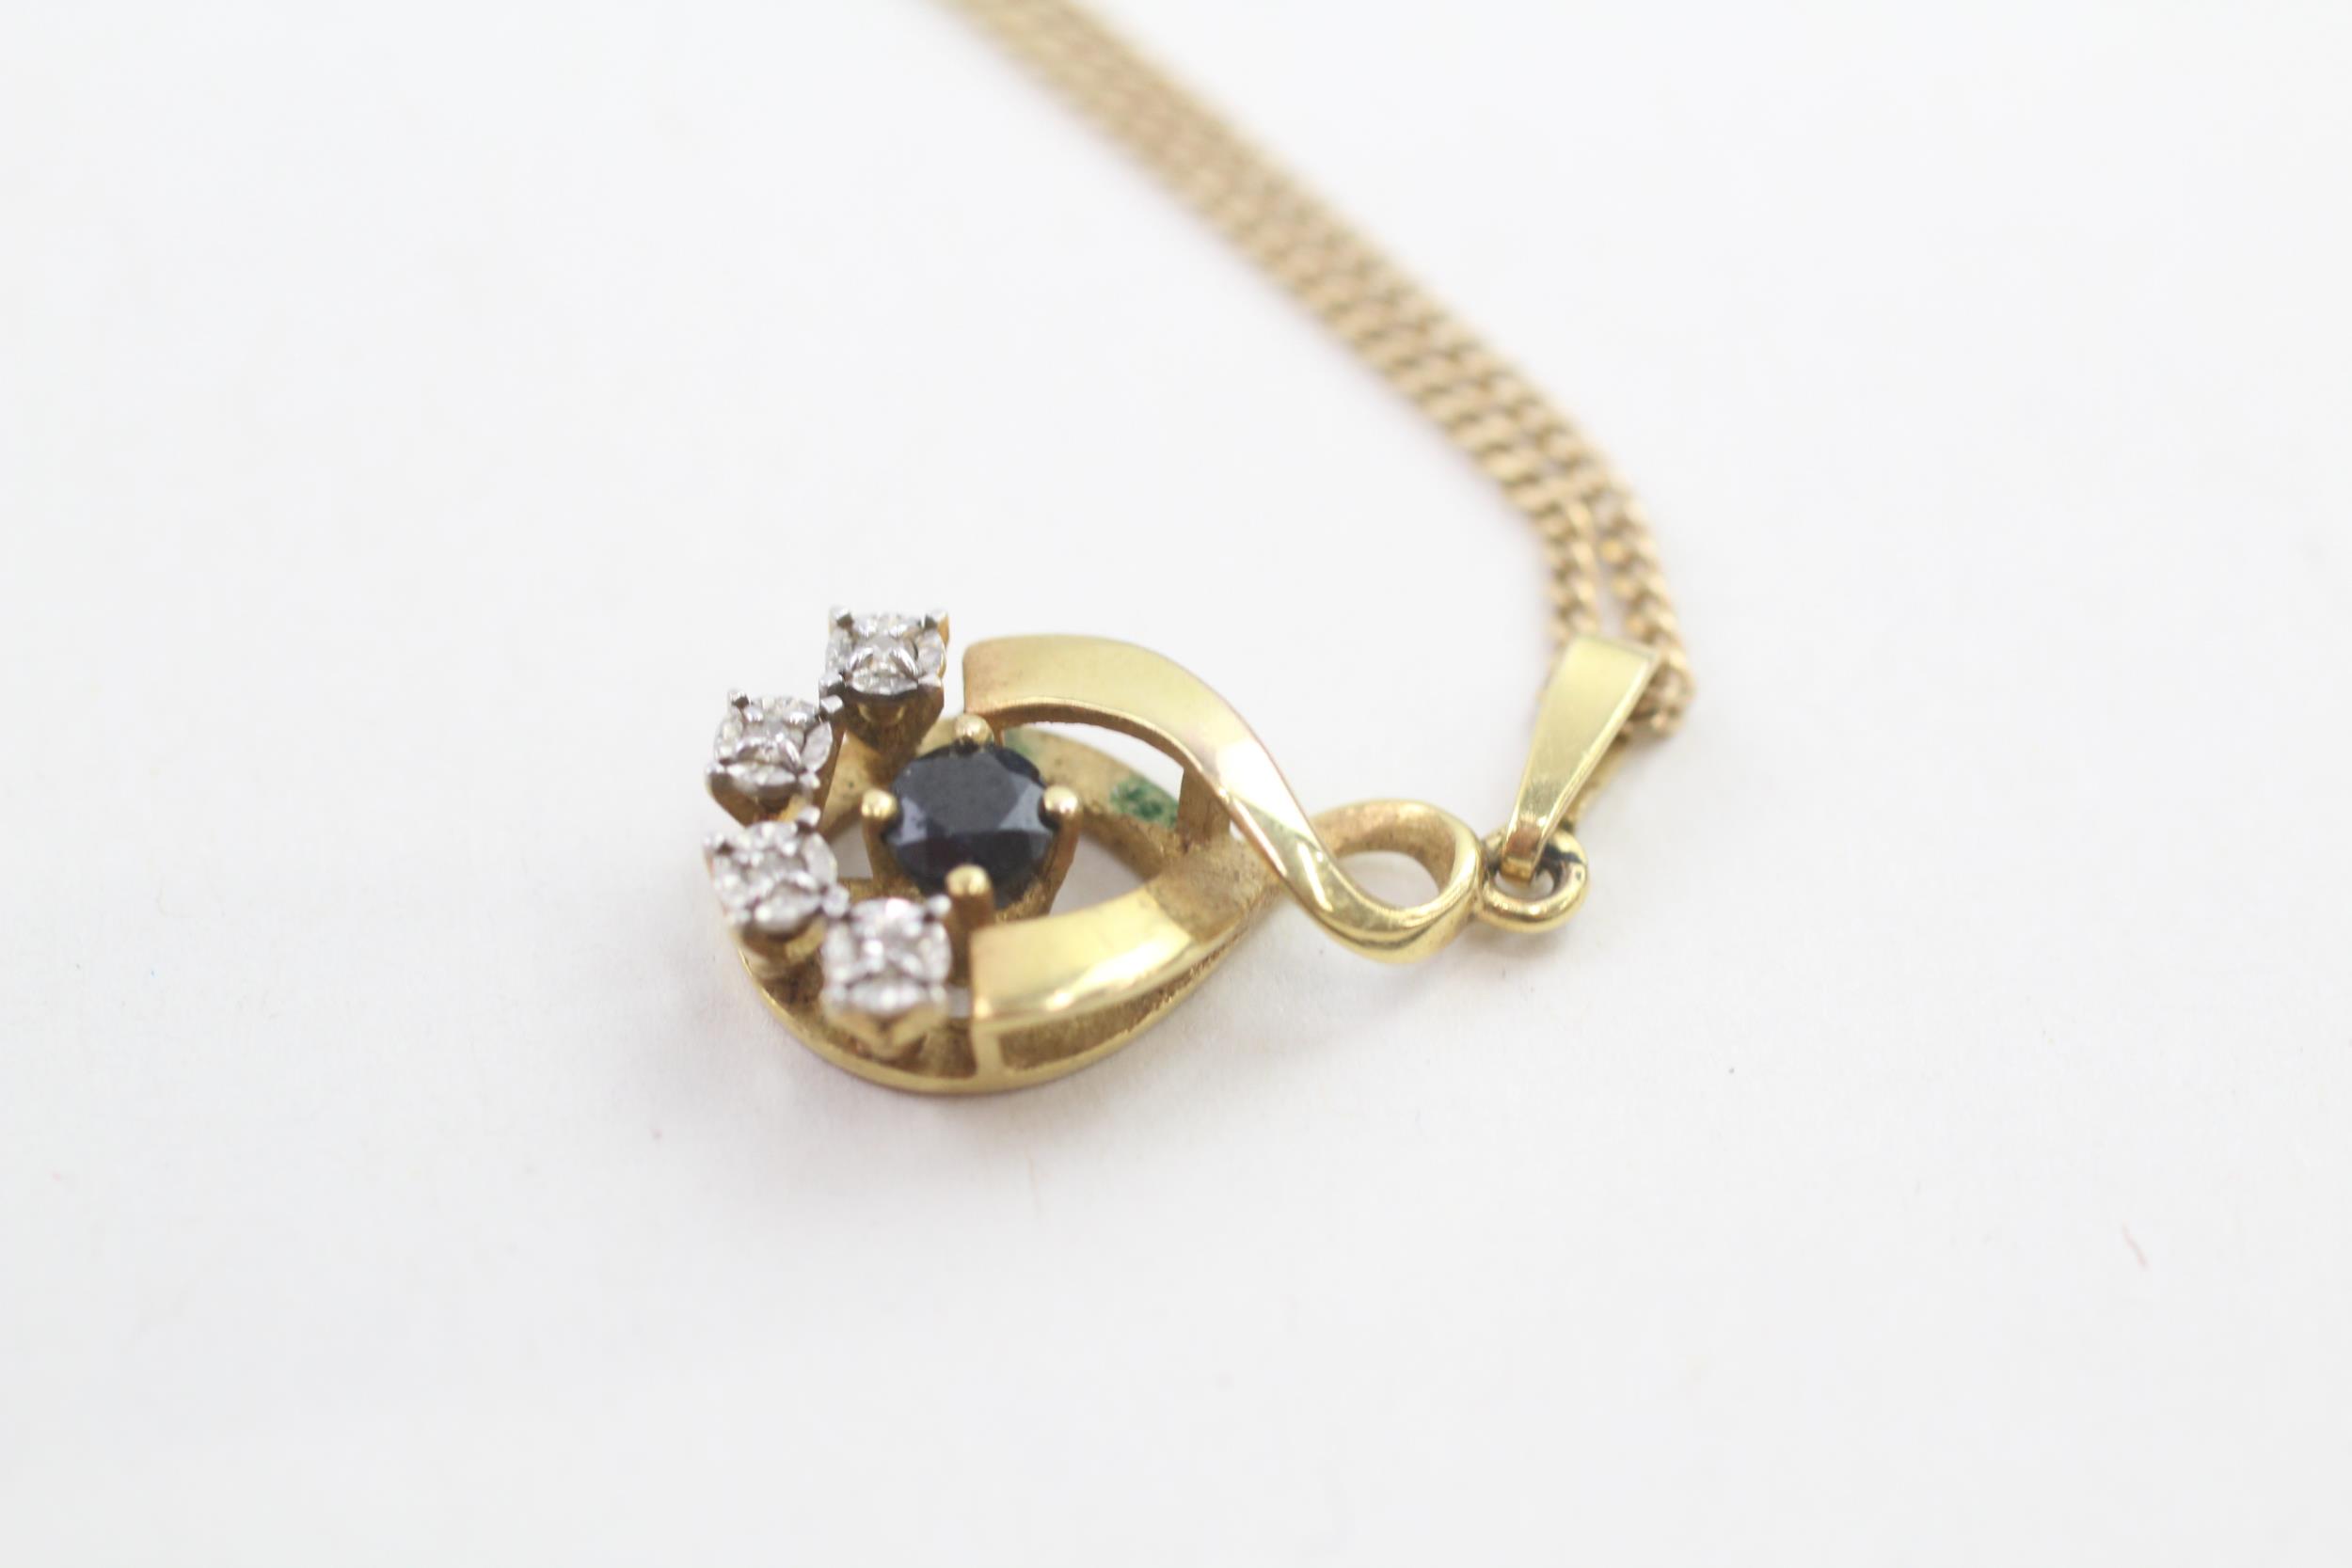 9ct gold sapphire & diamond pendant necklace (3.1g) - Image 4 of 5